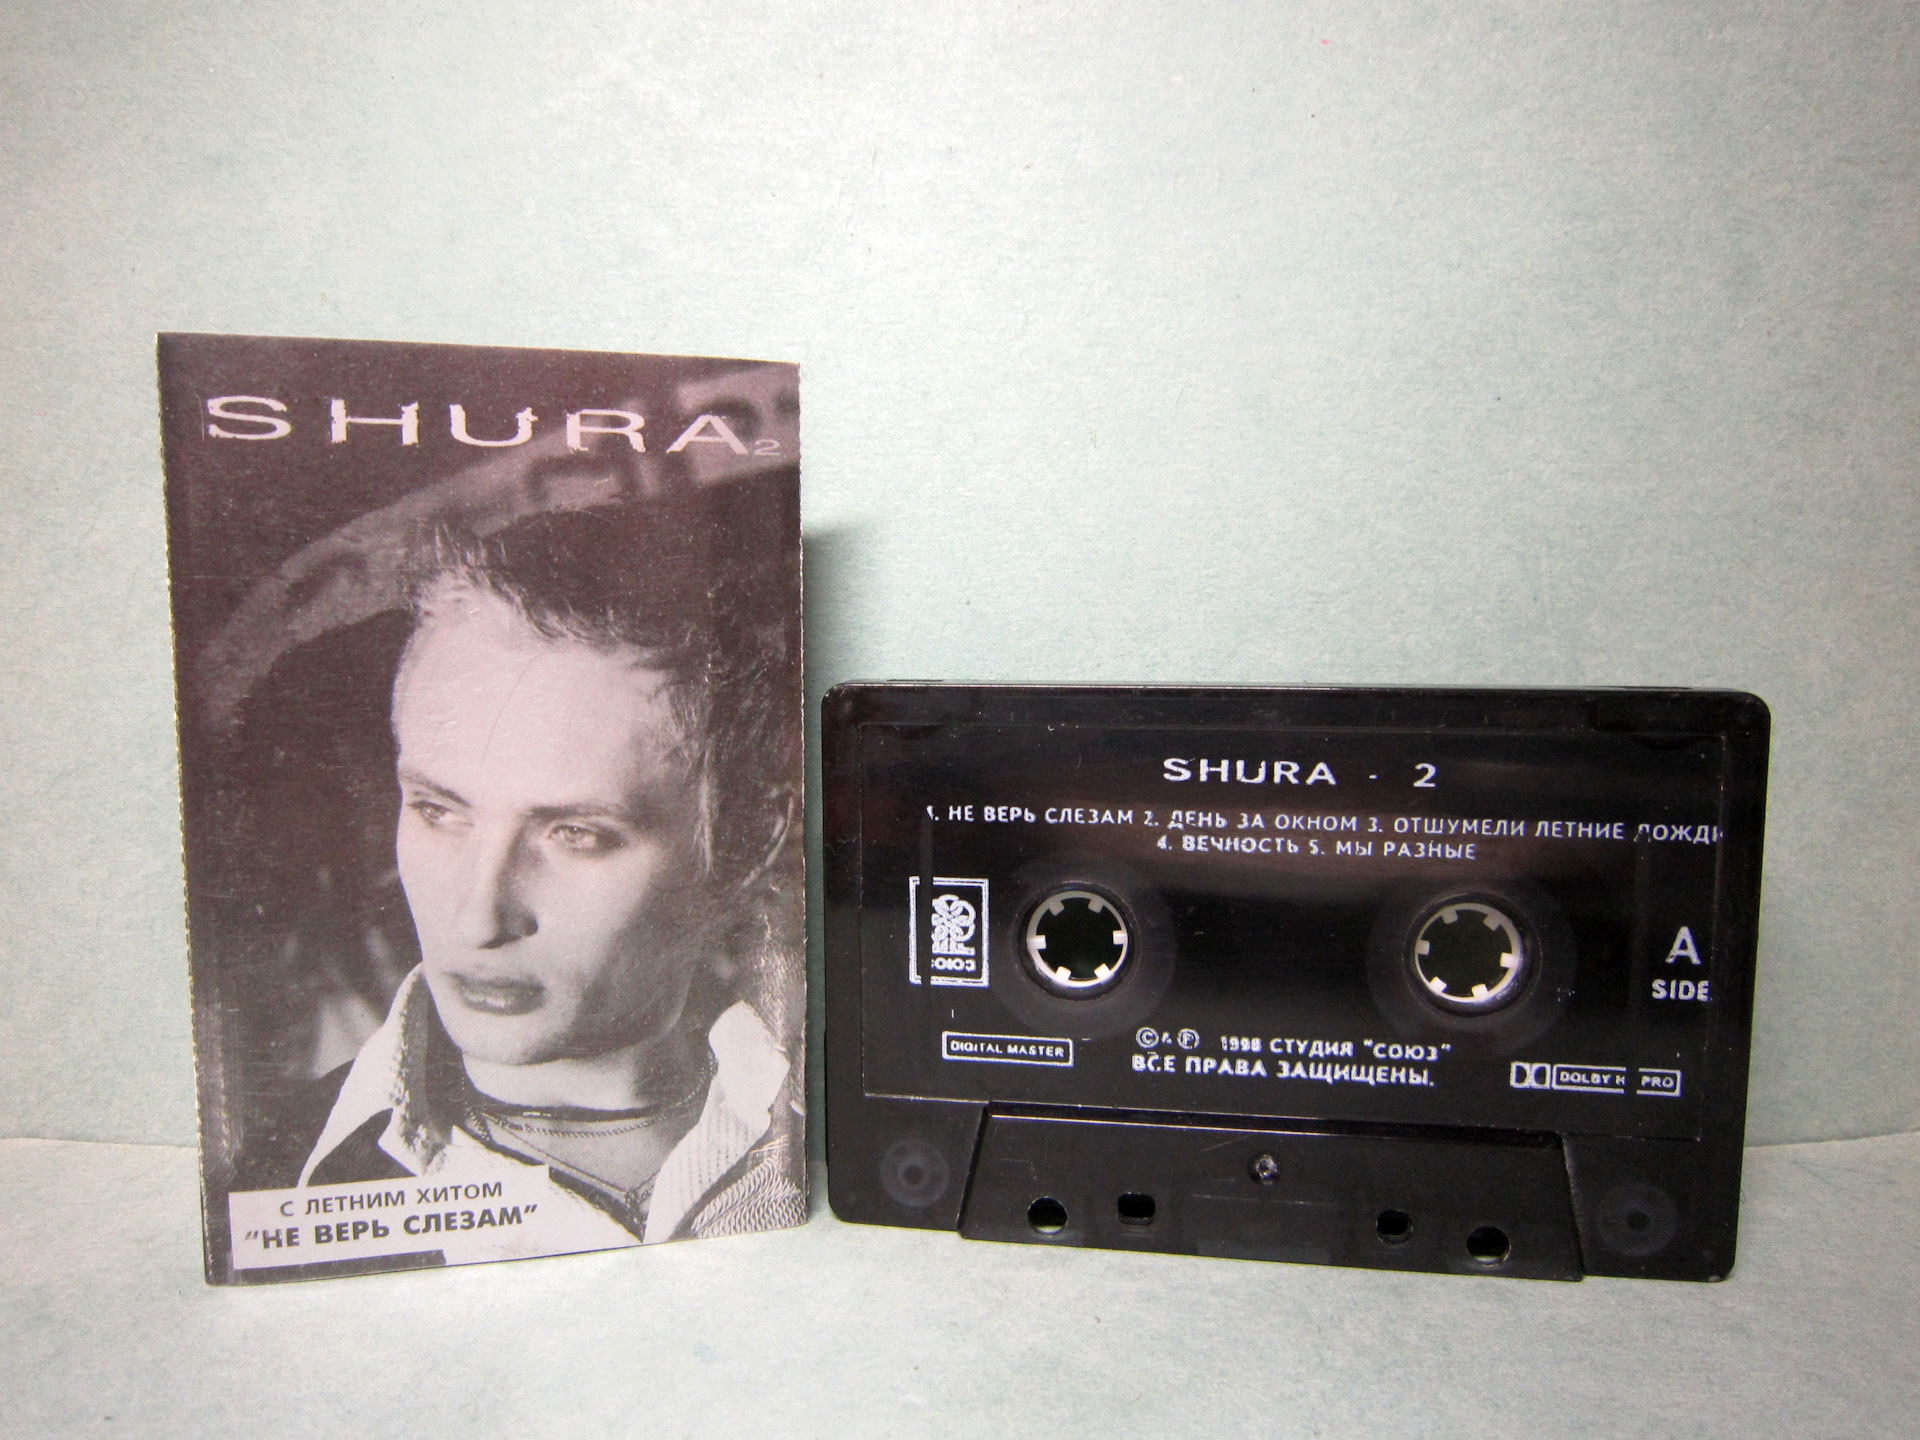 Не верь слезам все вернется текст песни. Shura 2 Шура кассета. Аудиокассеты Шура. Обложка аудиокассеты Шура. Первая кассета Шуры.